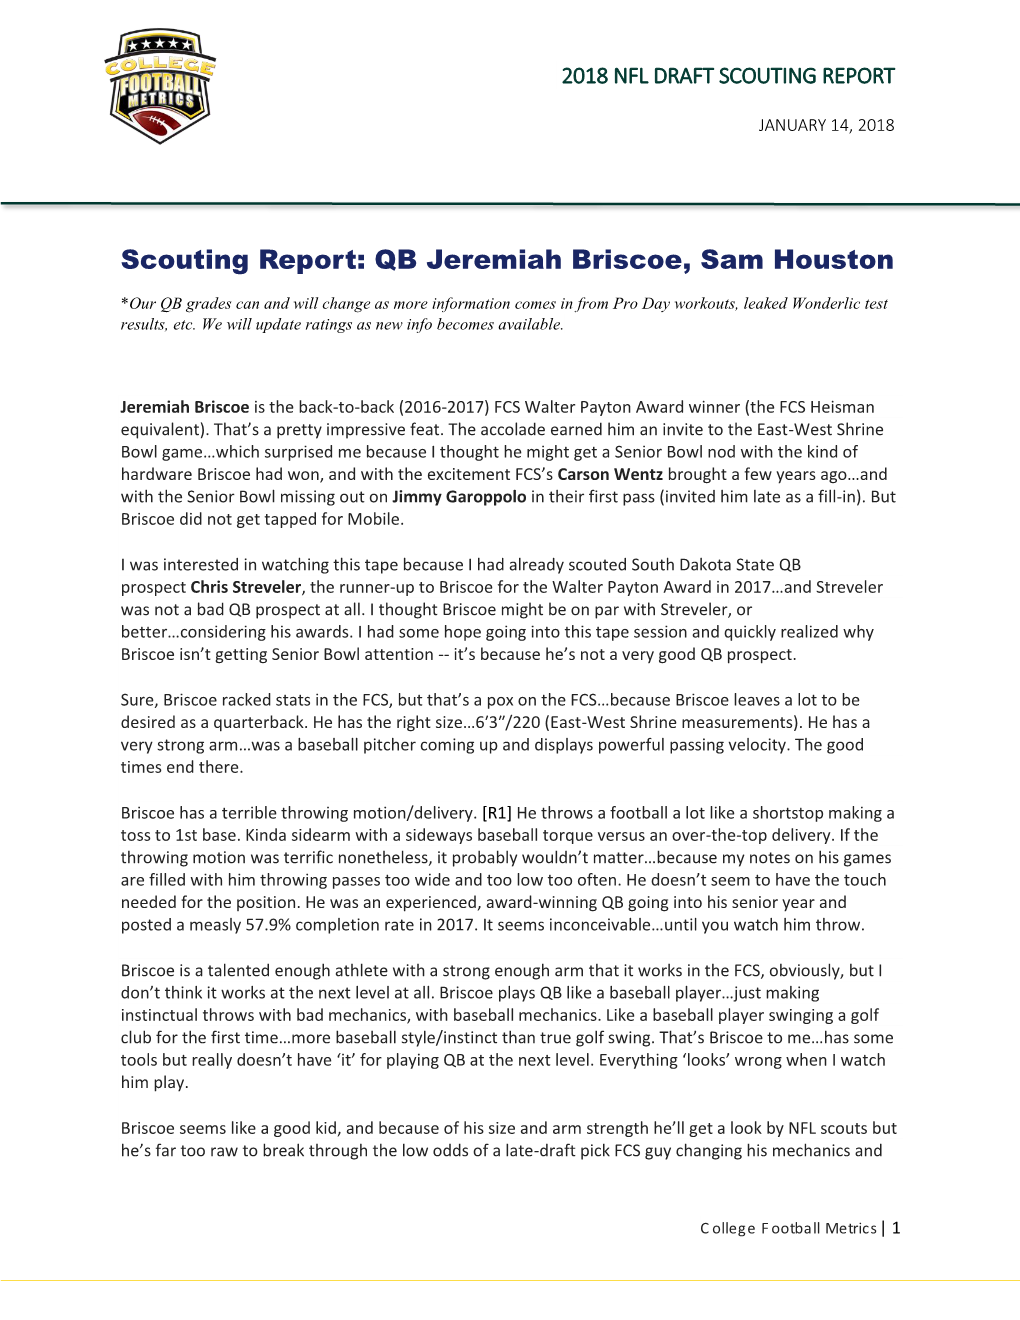 Scouting Report: QB Jeremiah Briscoe, Sam Houston